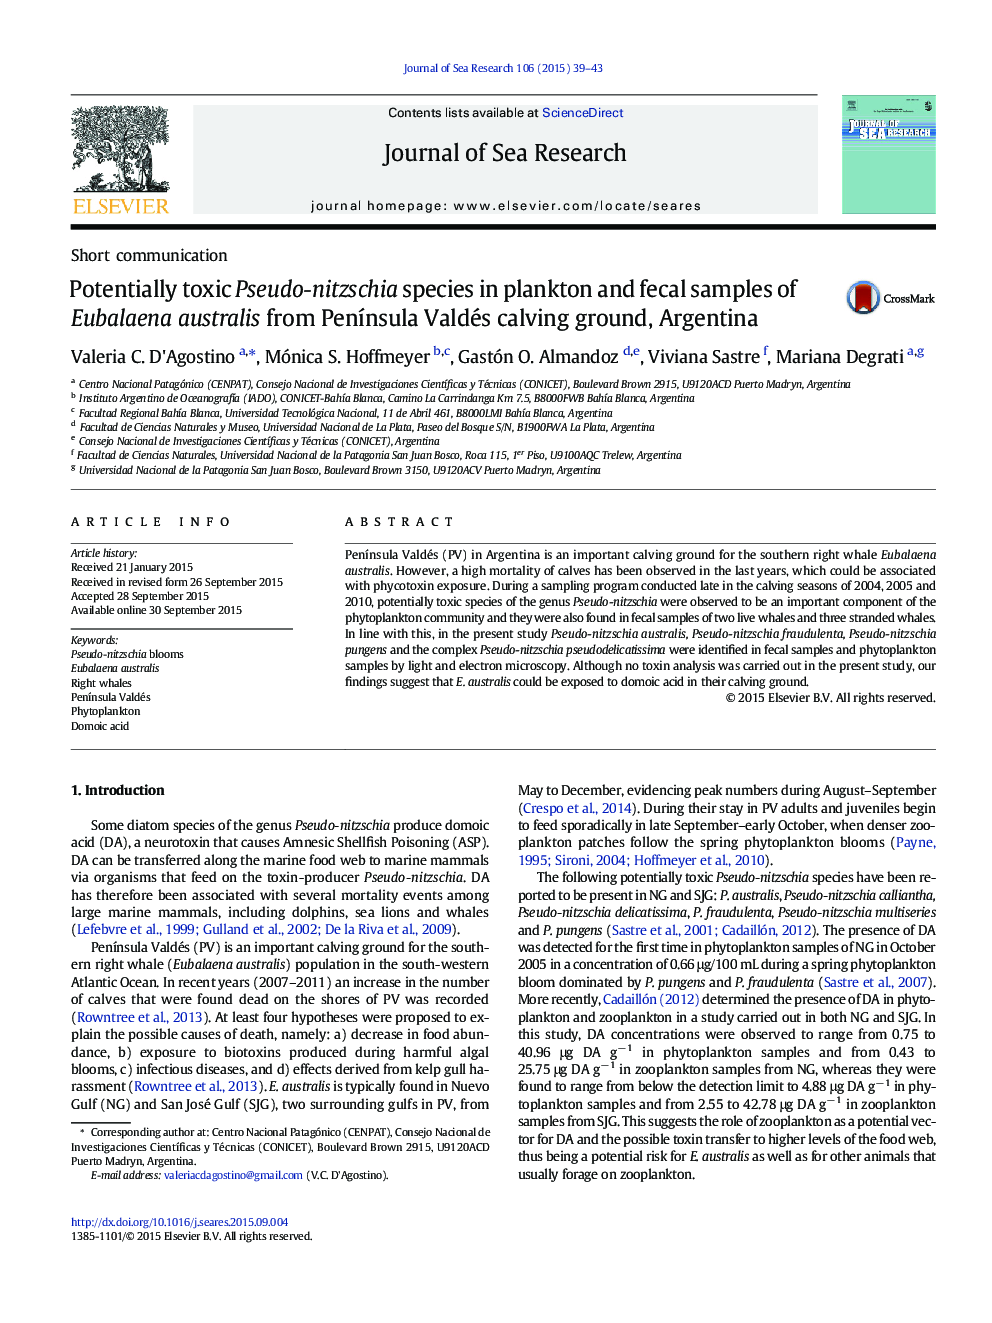 Potentially toxic Pseudo-nitzschia species in plankton and fecal samples of Eubalaena australis from Península Valdés calving ground, Argentina